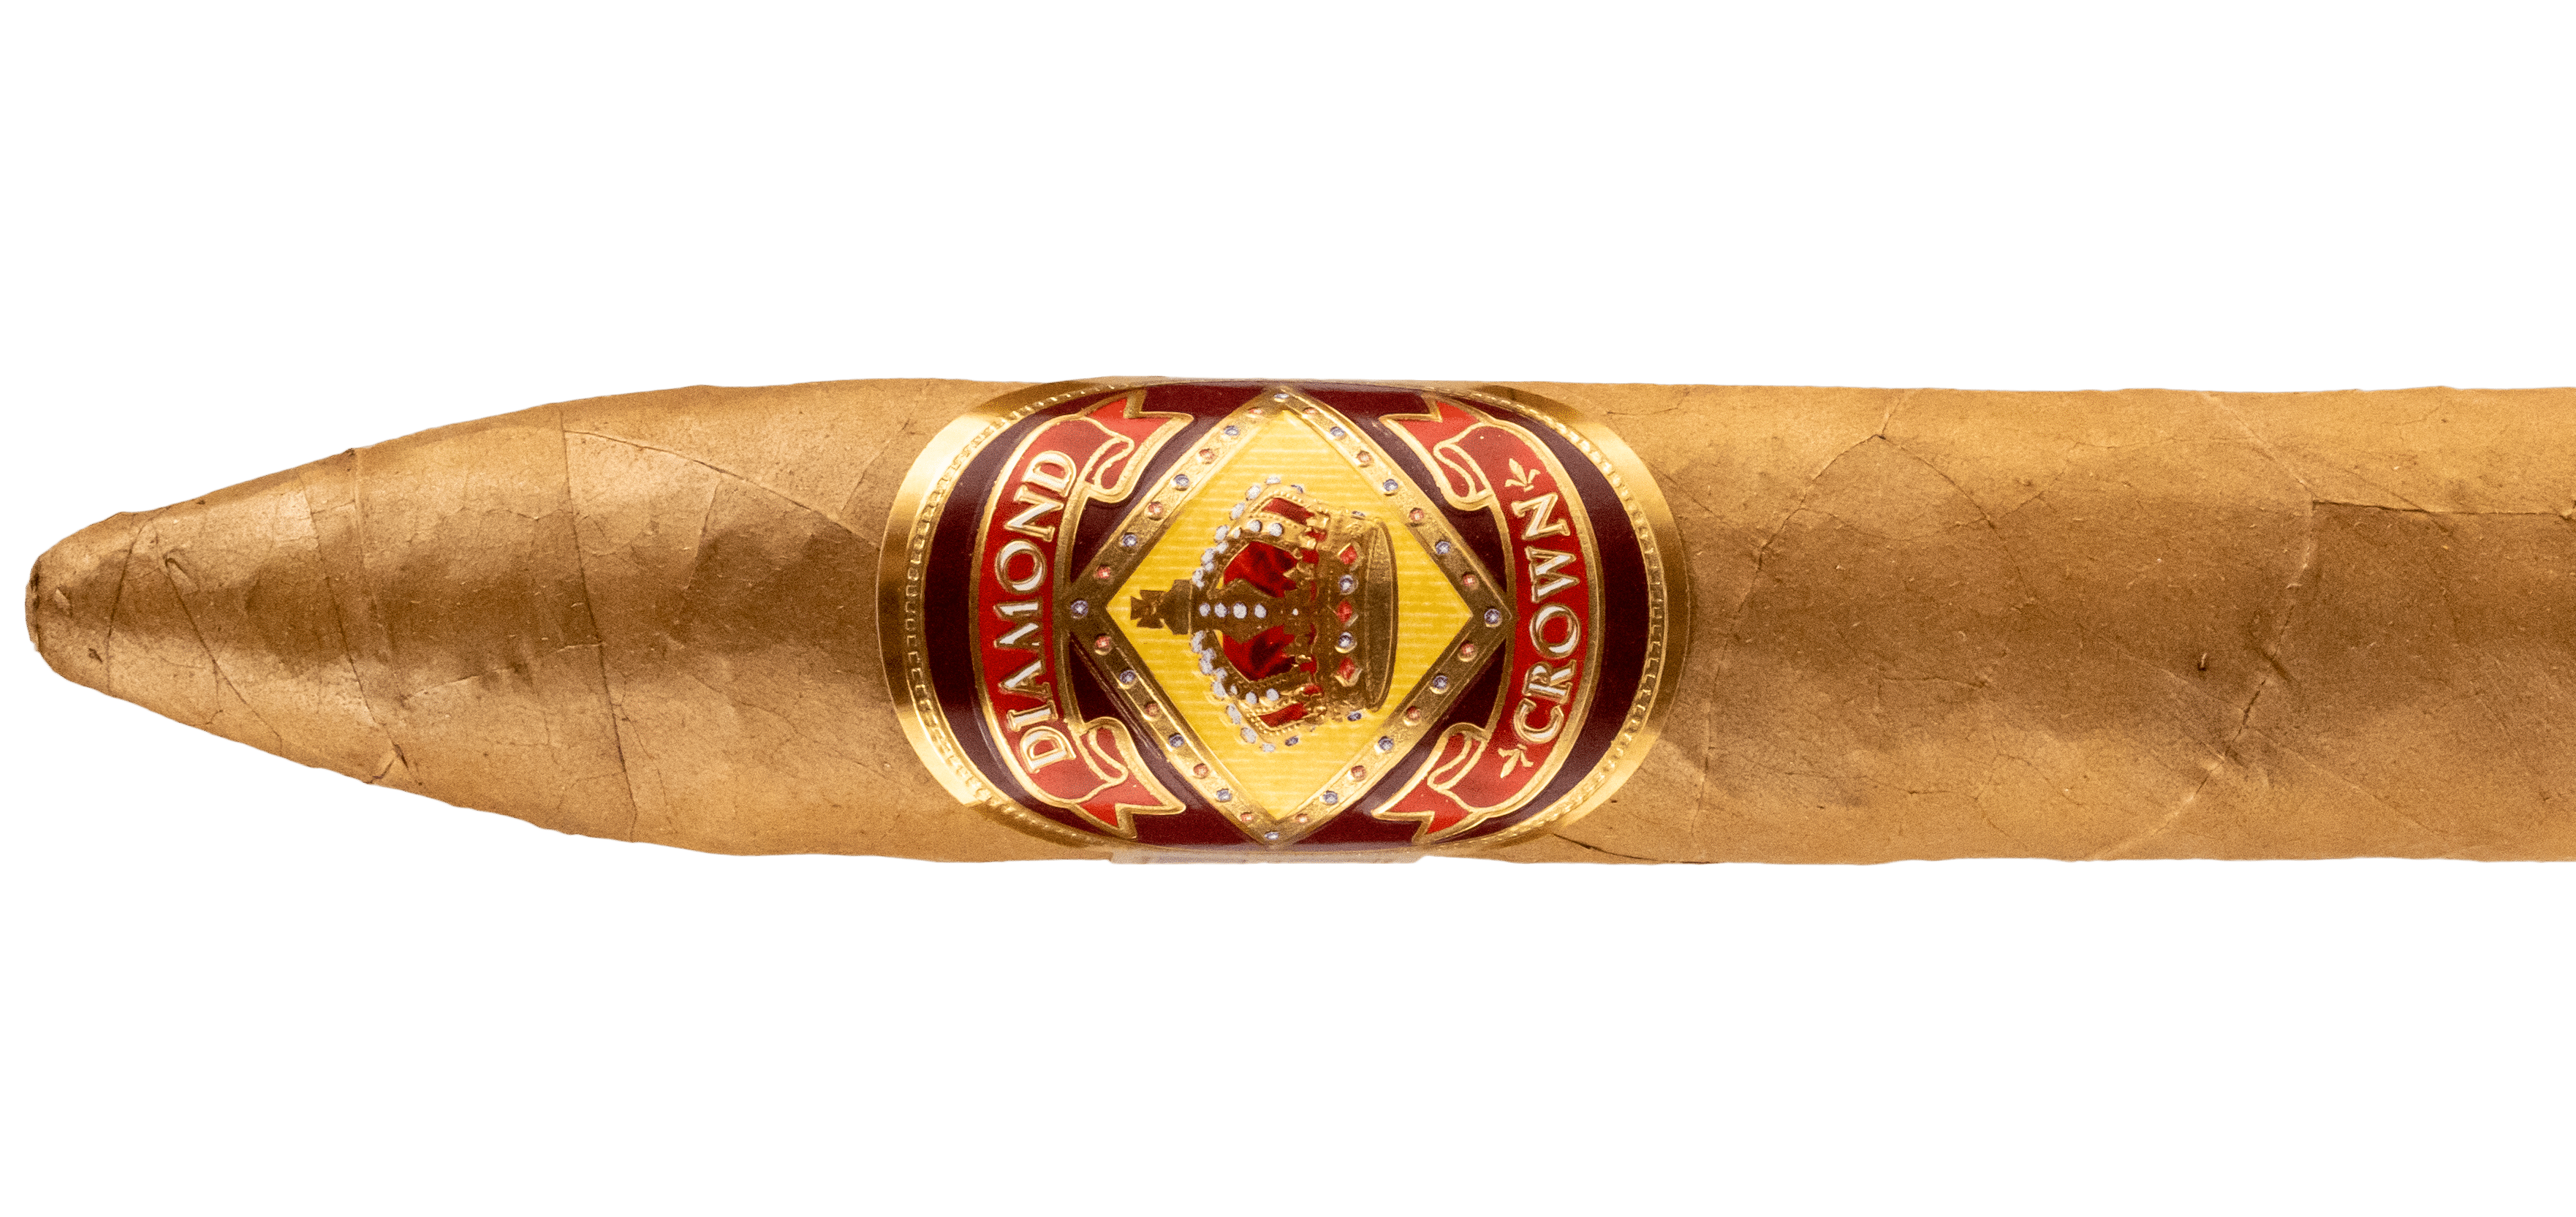 J.C. Newman Diamond Crown Pyramid No. 7 - Blind Cigar Review